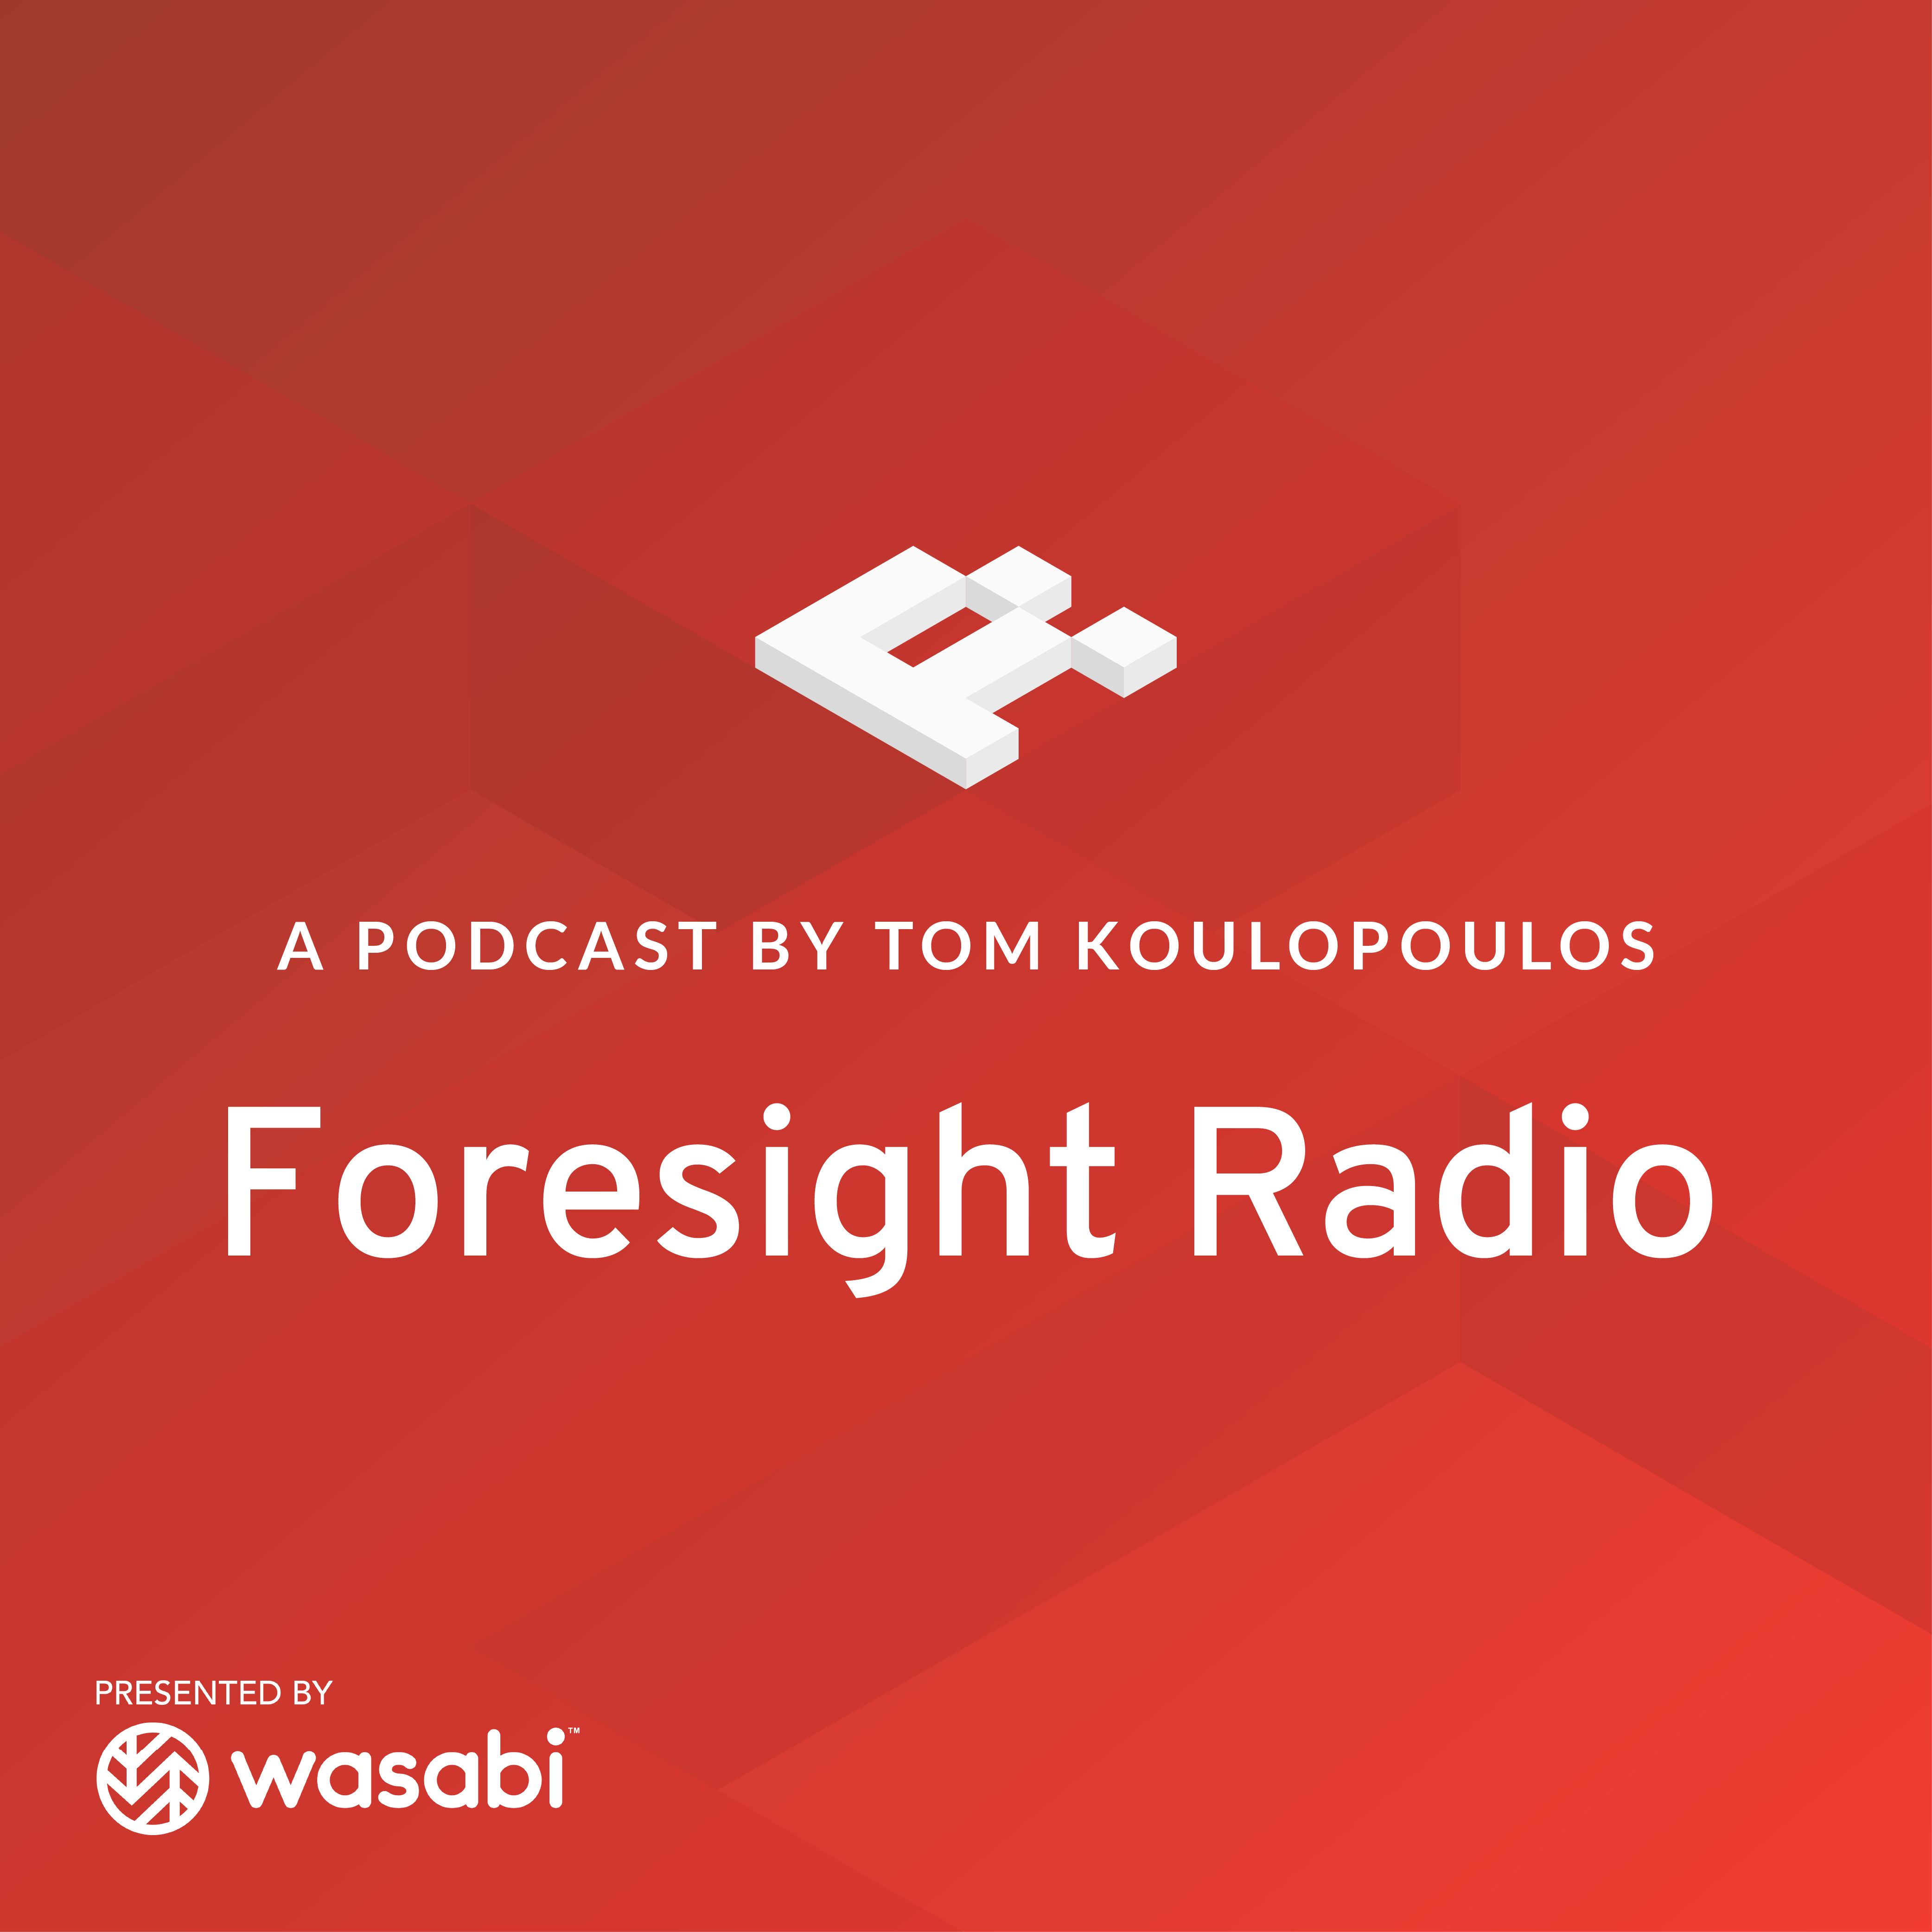 Foresight Radio